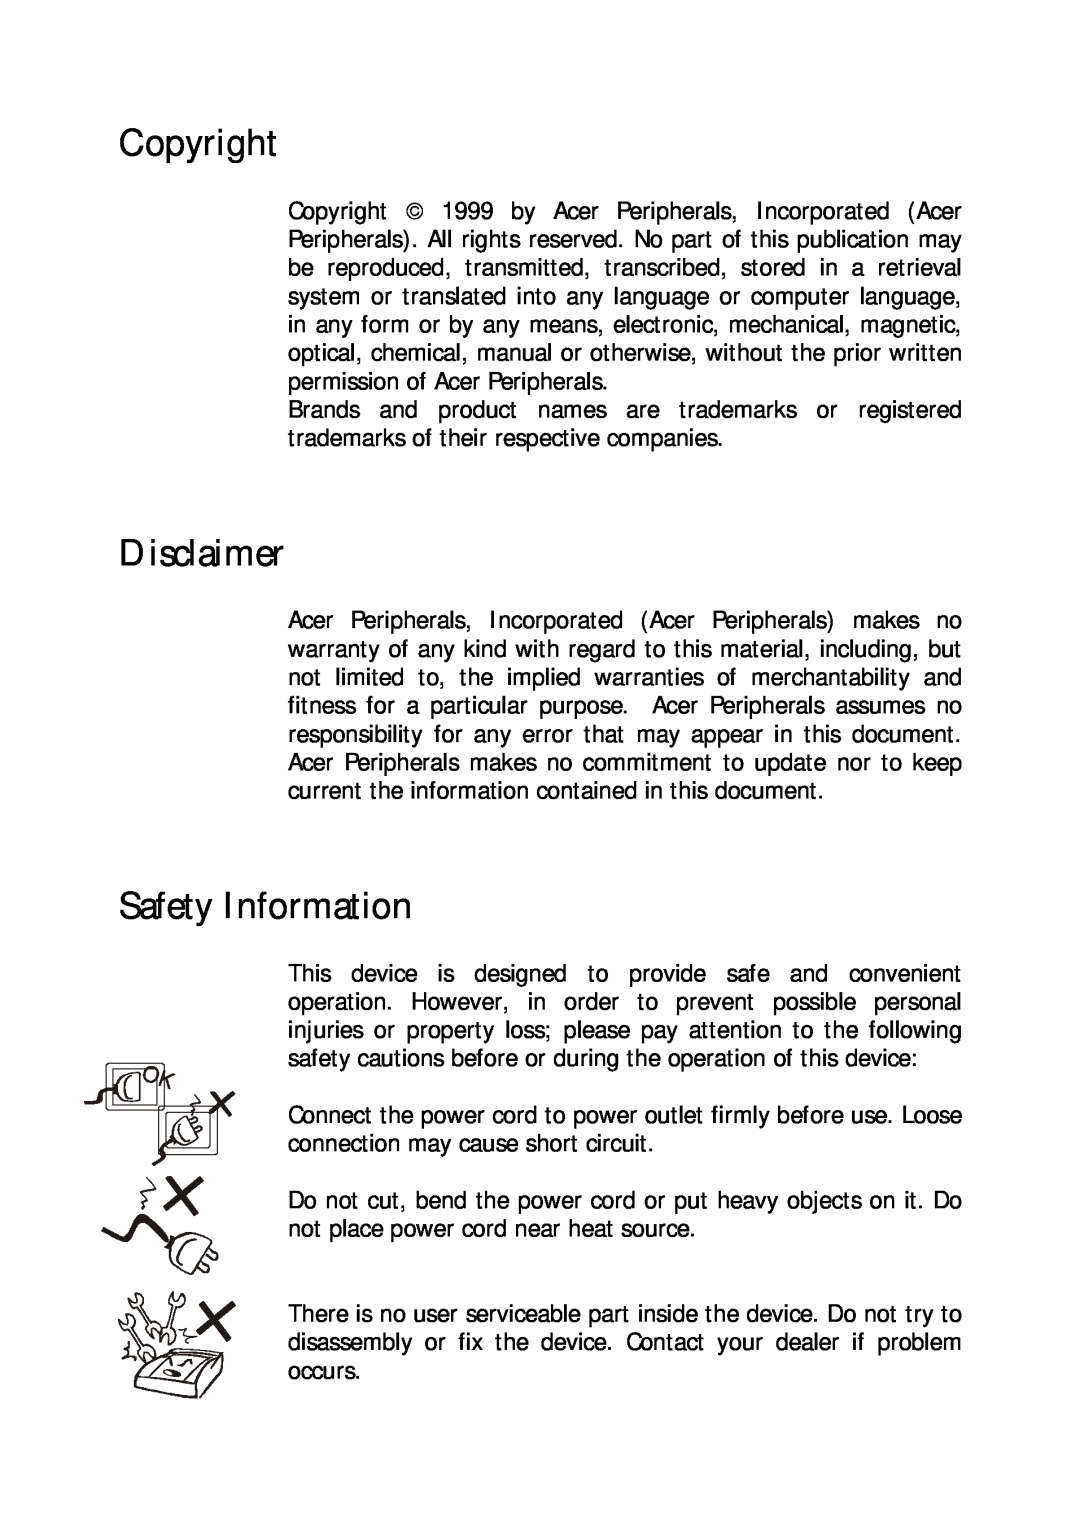 Acer 300P user manual Copyright, Disclaimer, Safety Information 